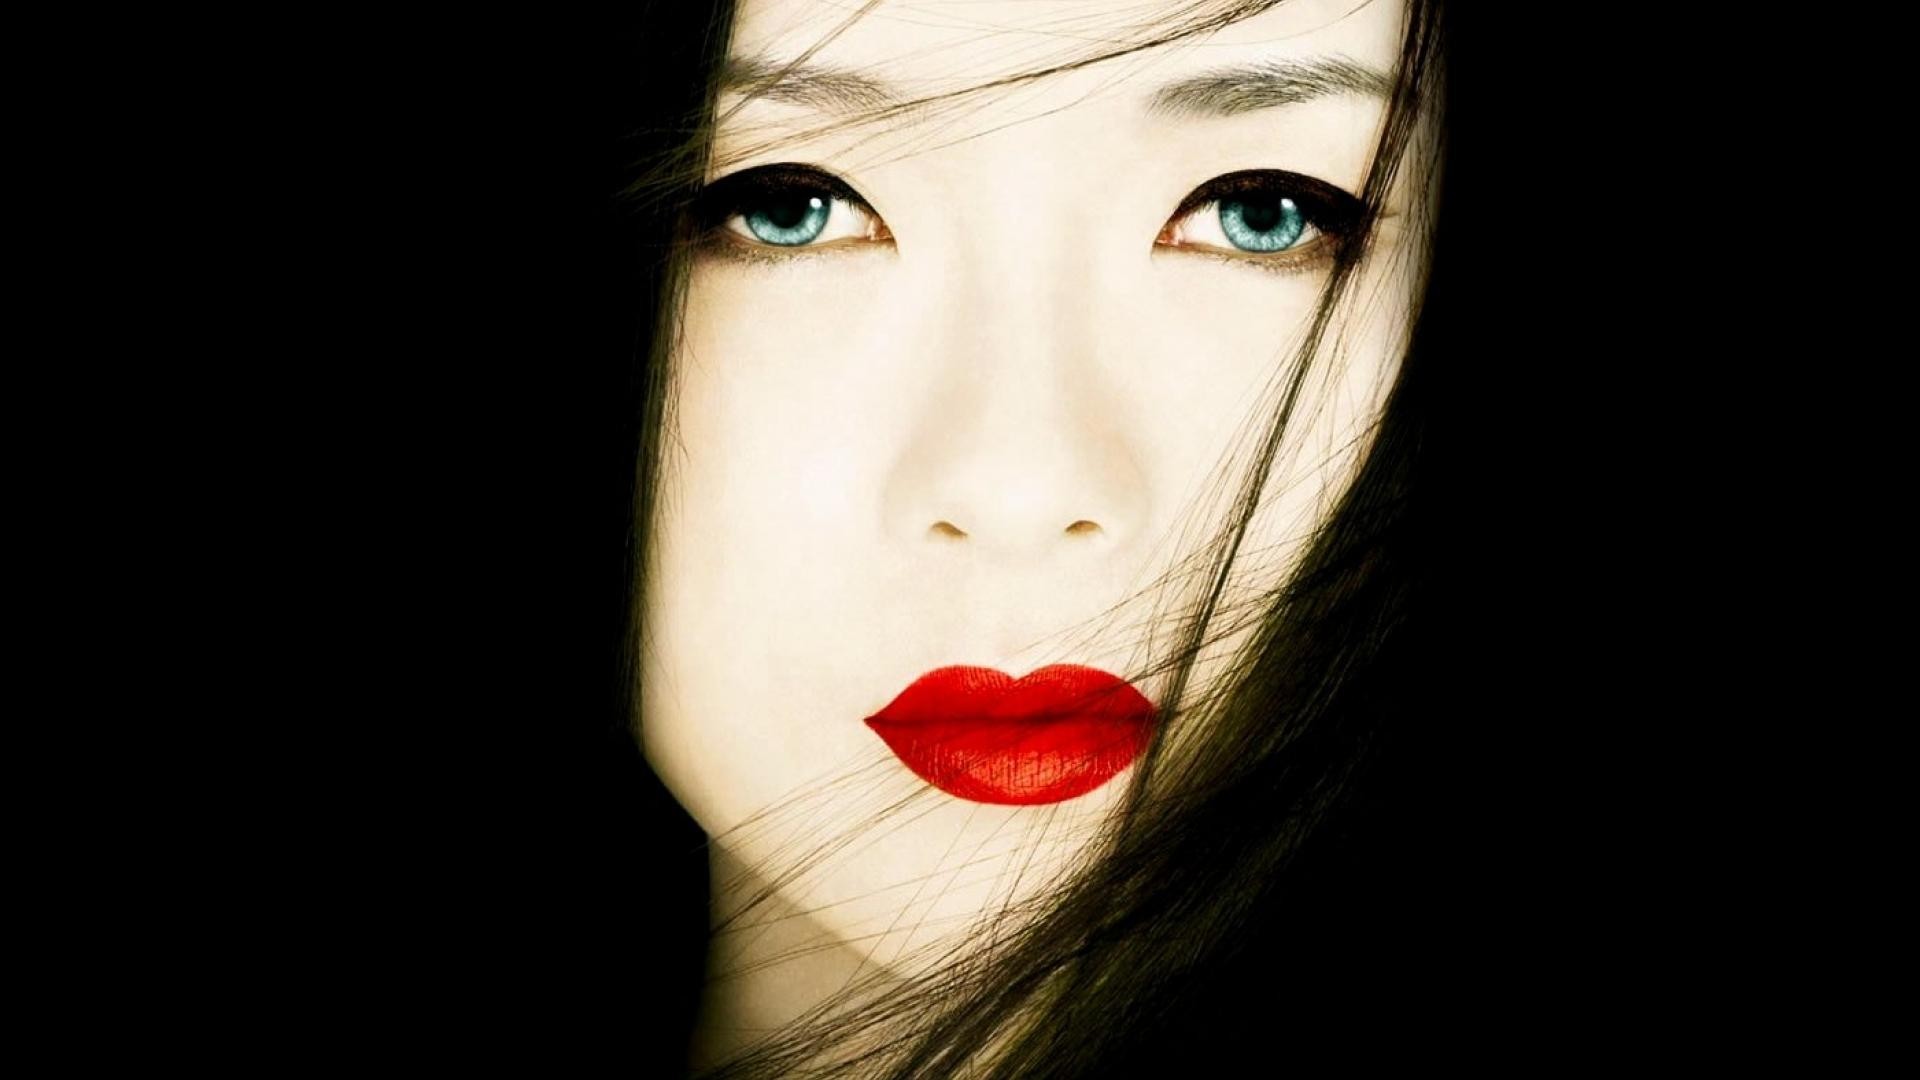 General 1920x1080 face movies women Asian red lipstick actress dark hair closeup fair skin blue eyes